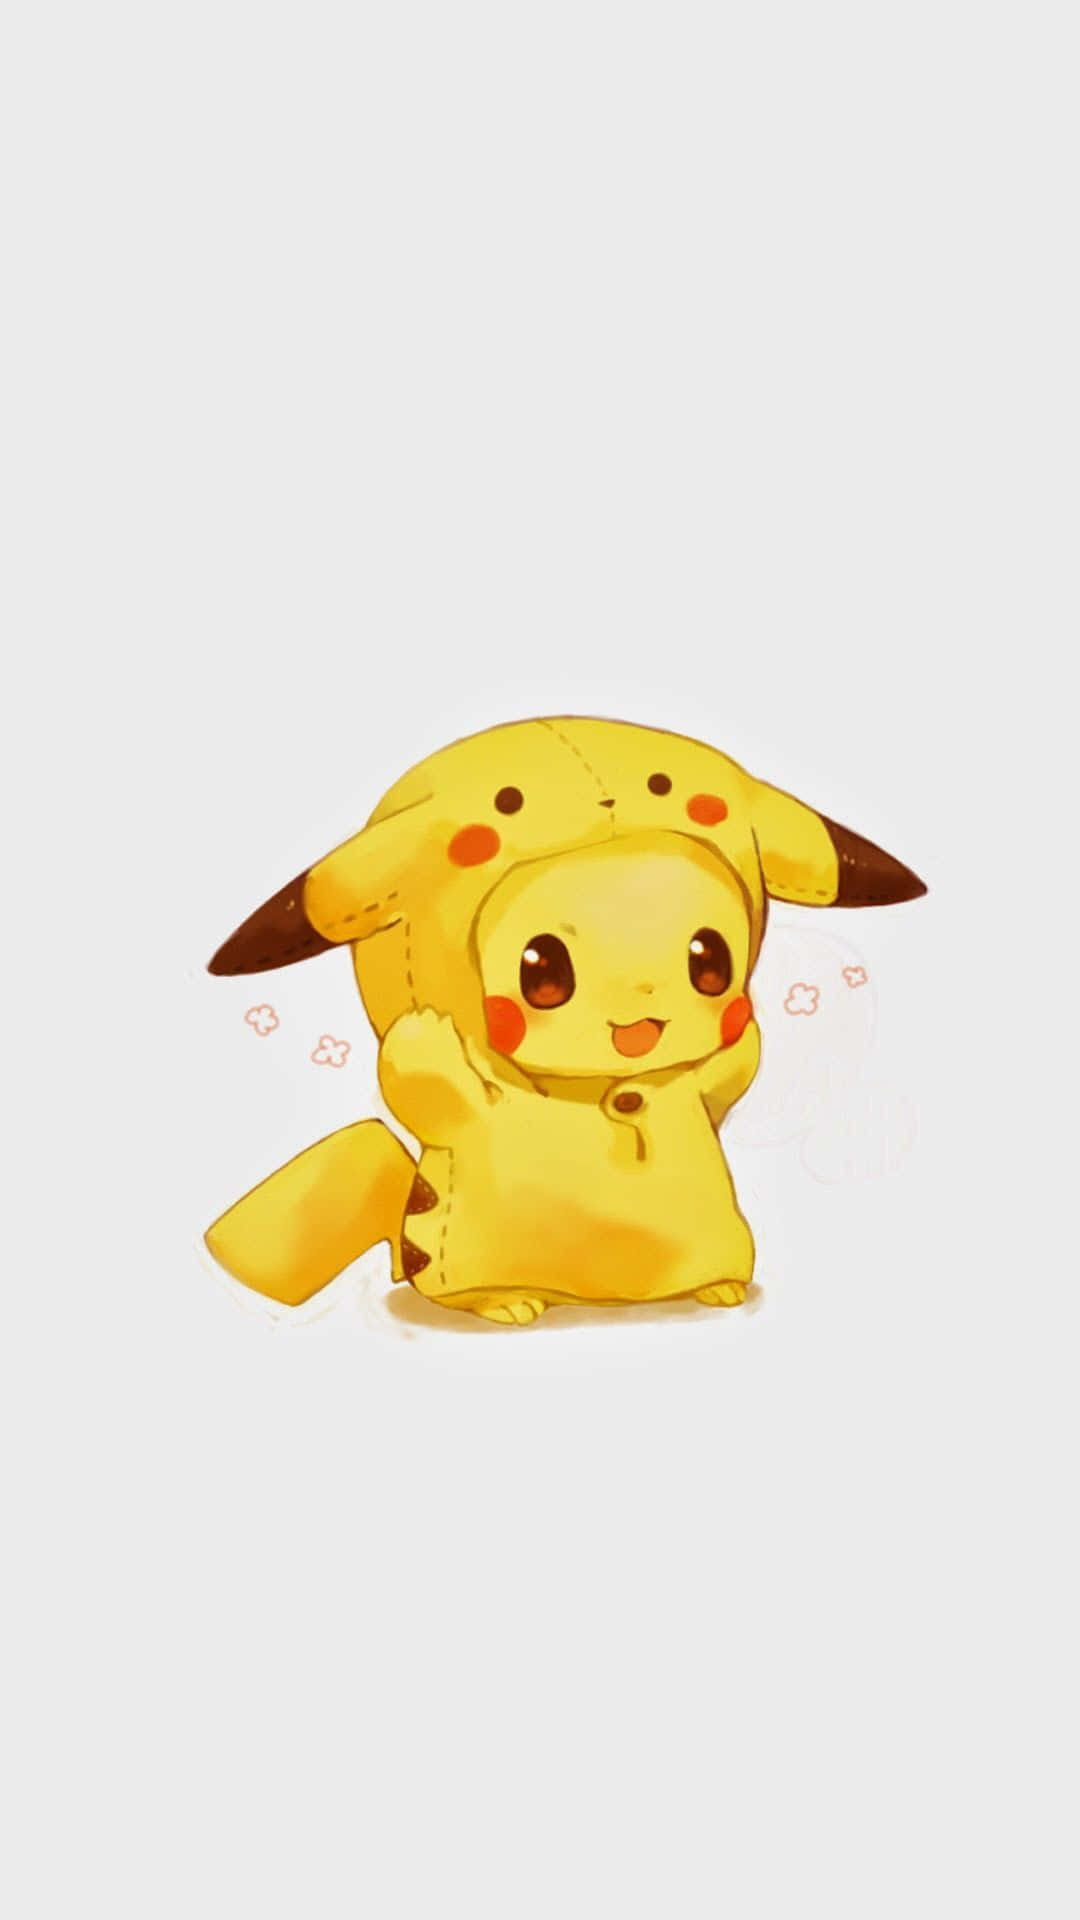 Cute Baby Pikachu 1080 X 1920 Wallpaper